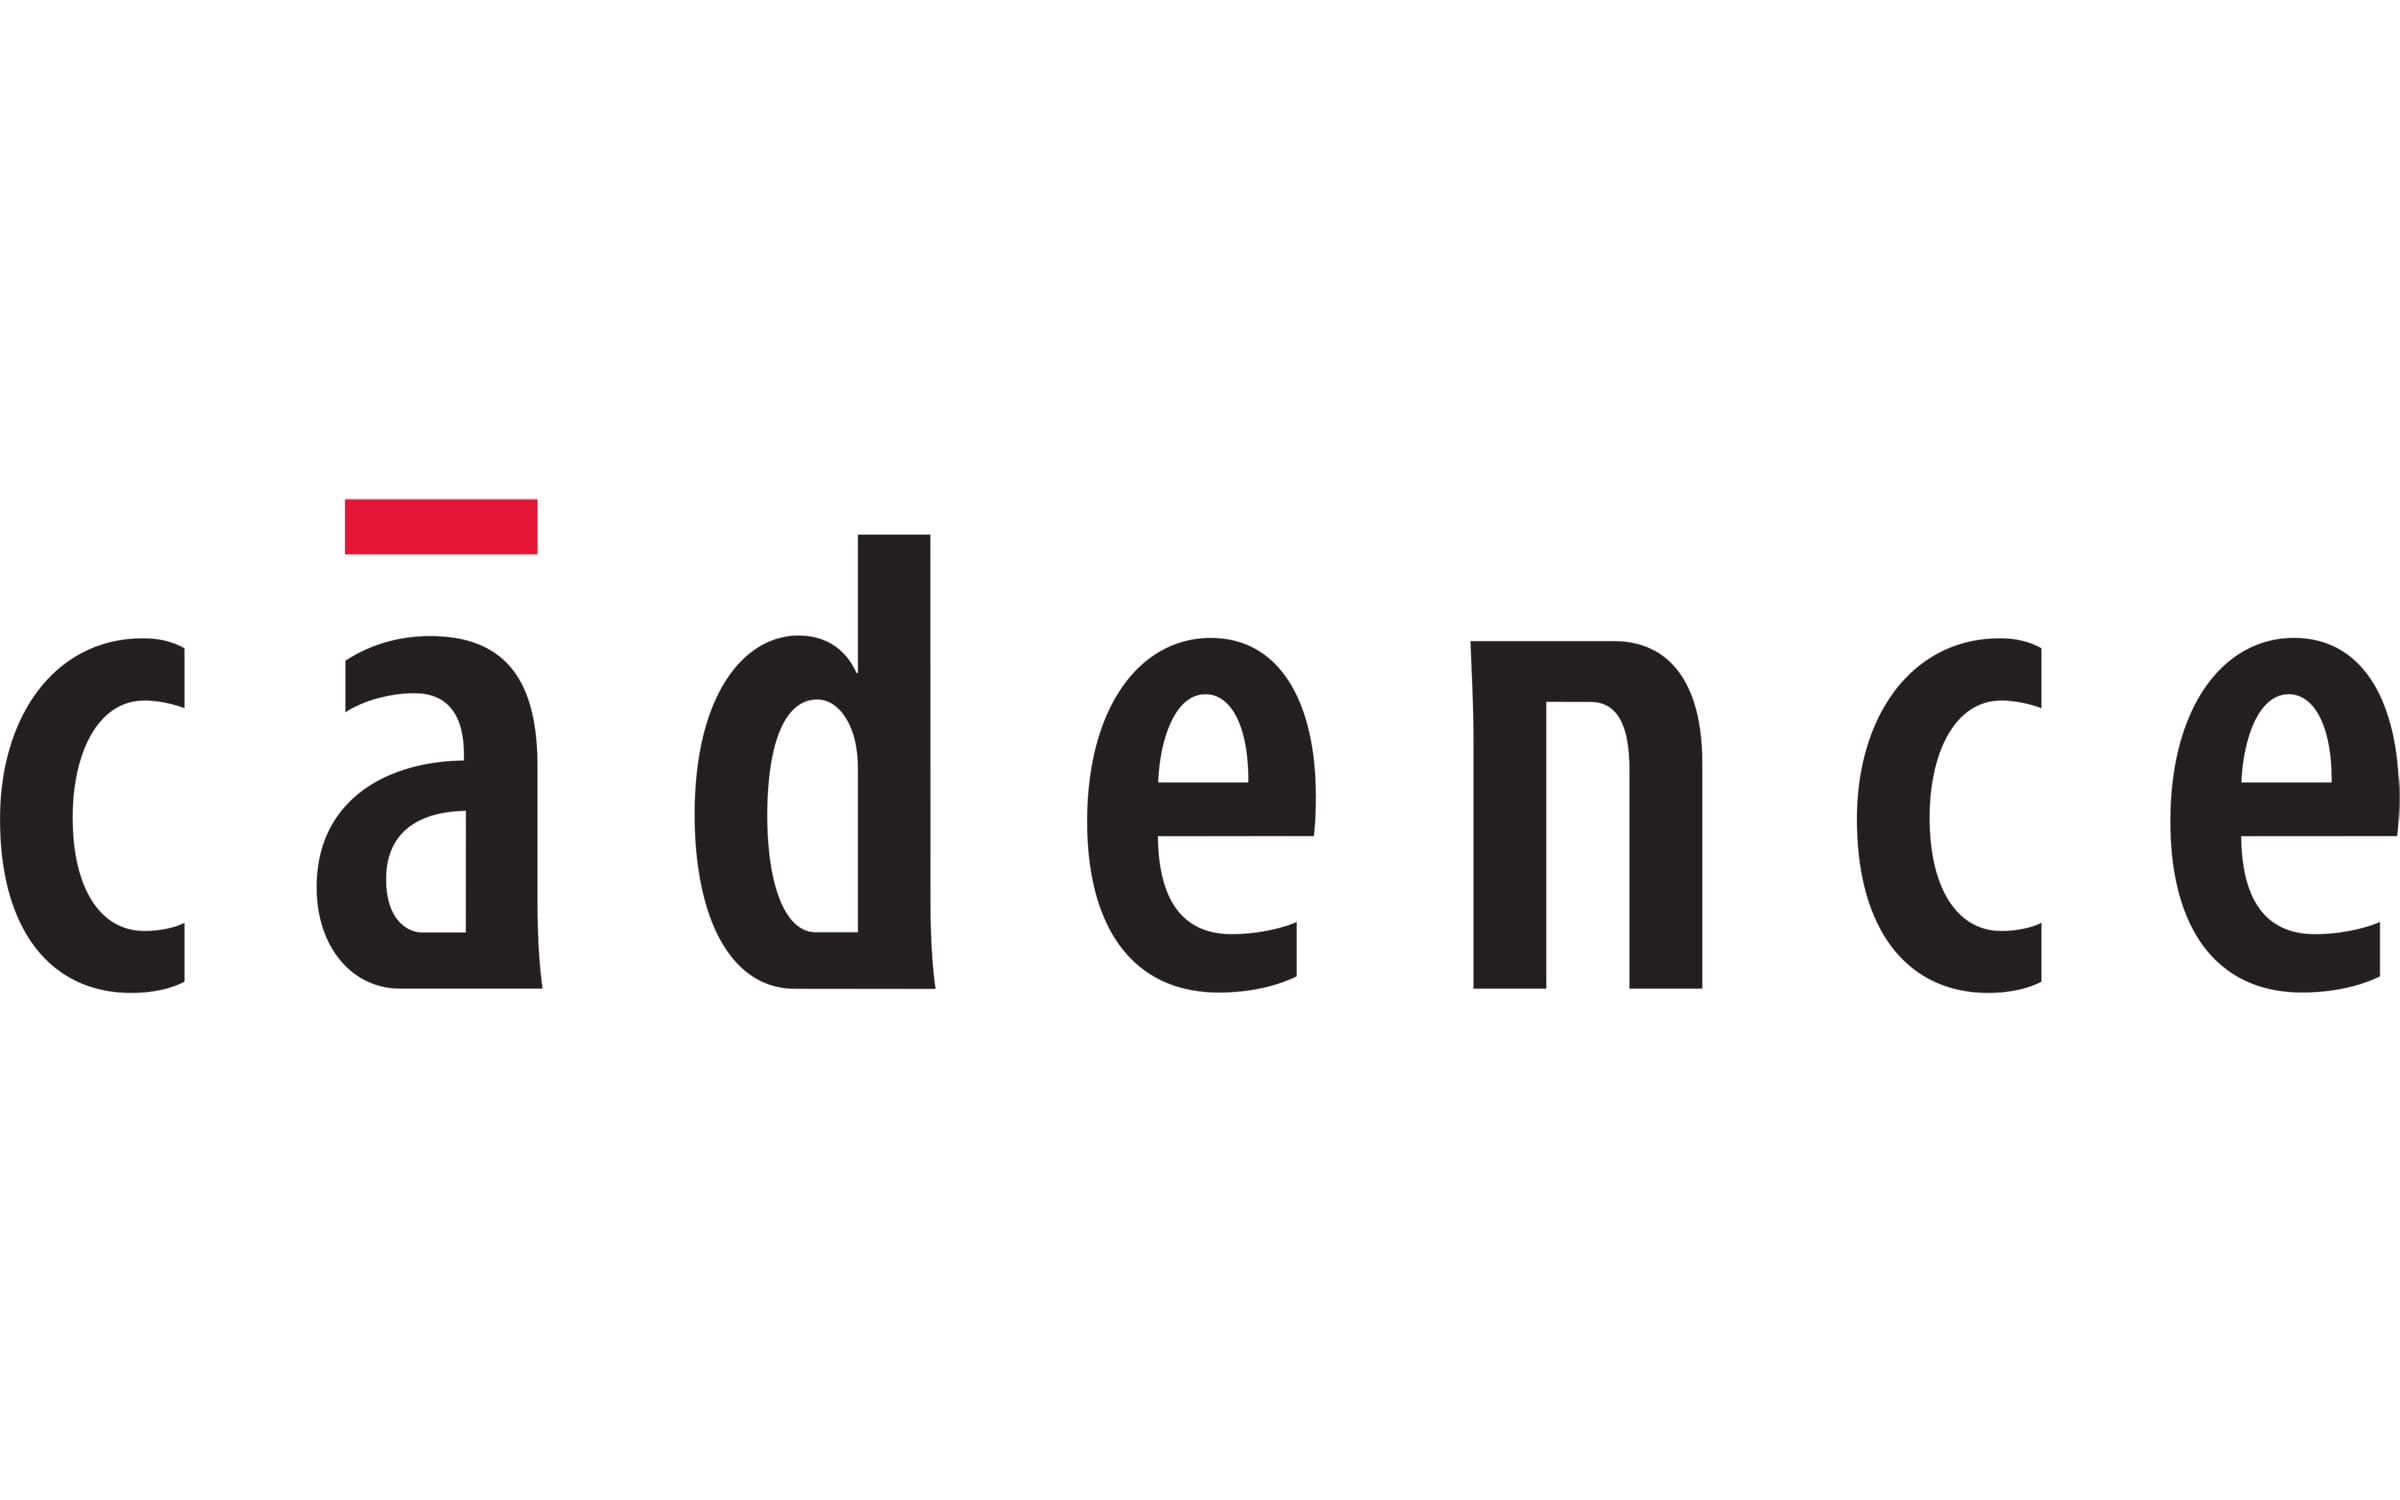 Cadence tool authorization Logo